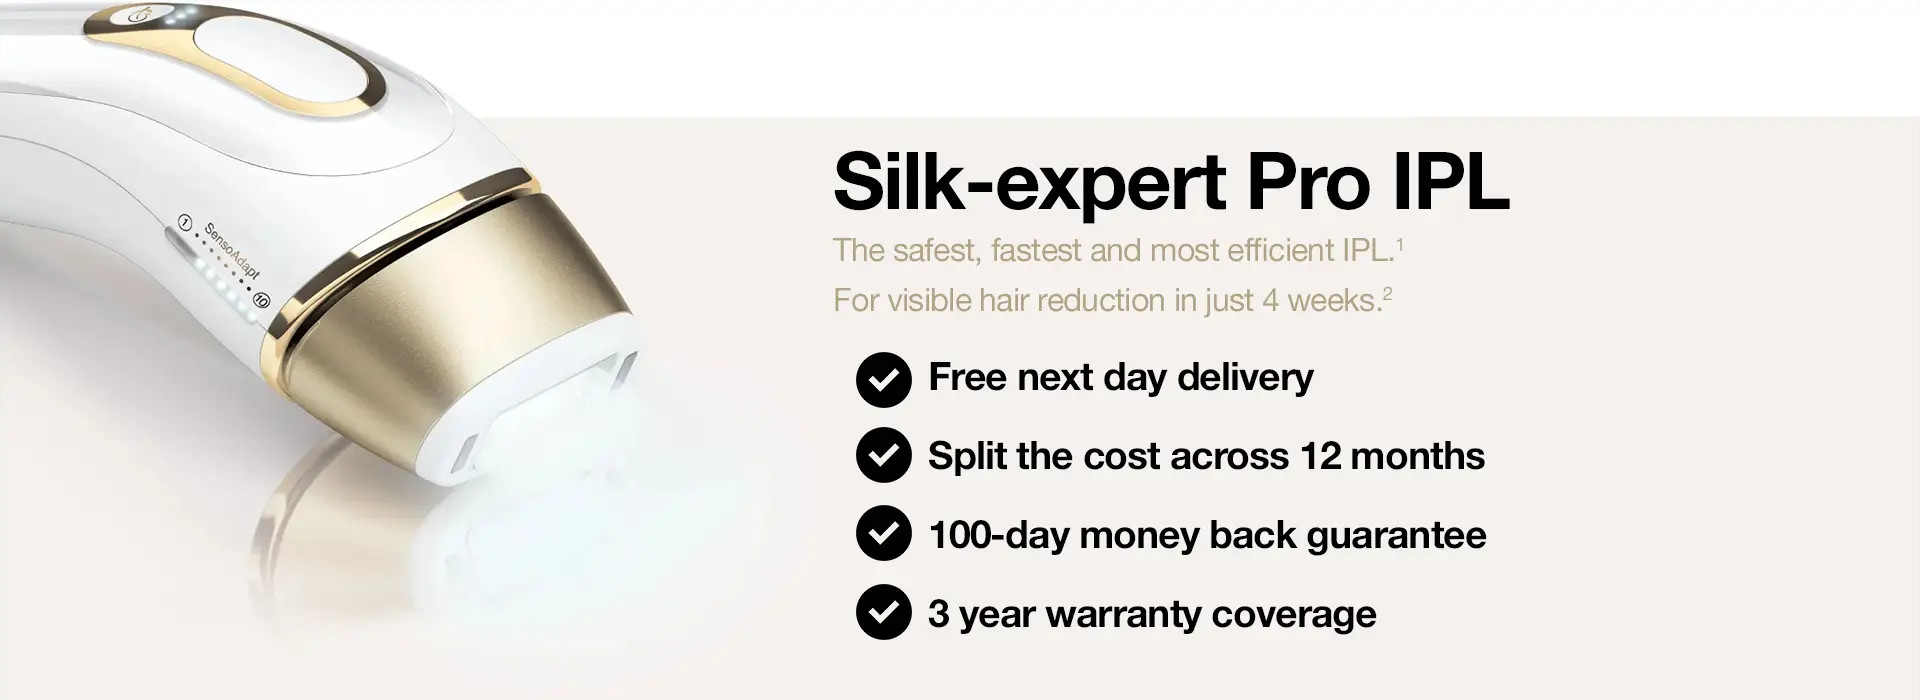 silk export pro women shaving